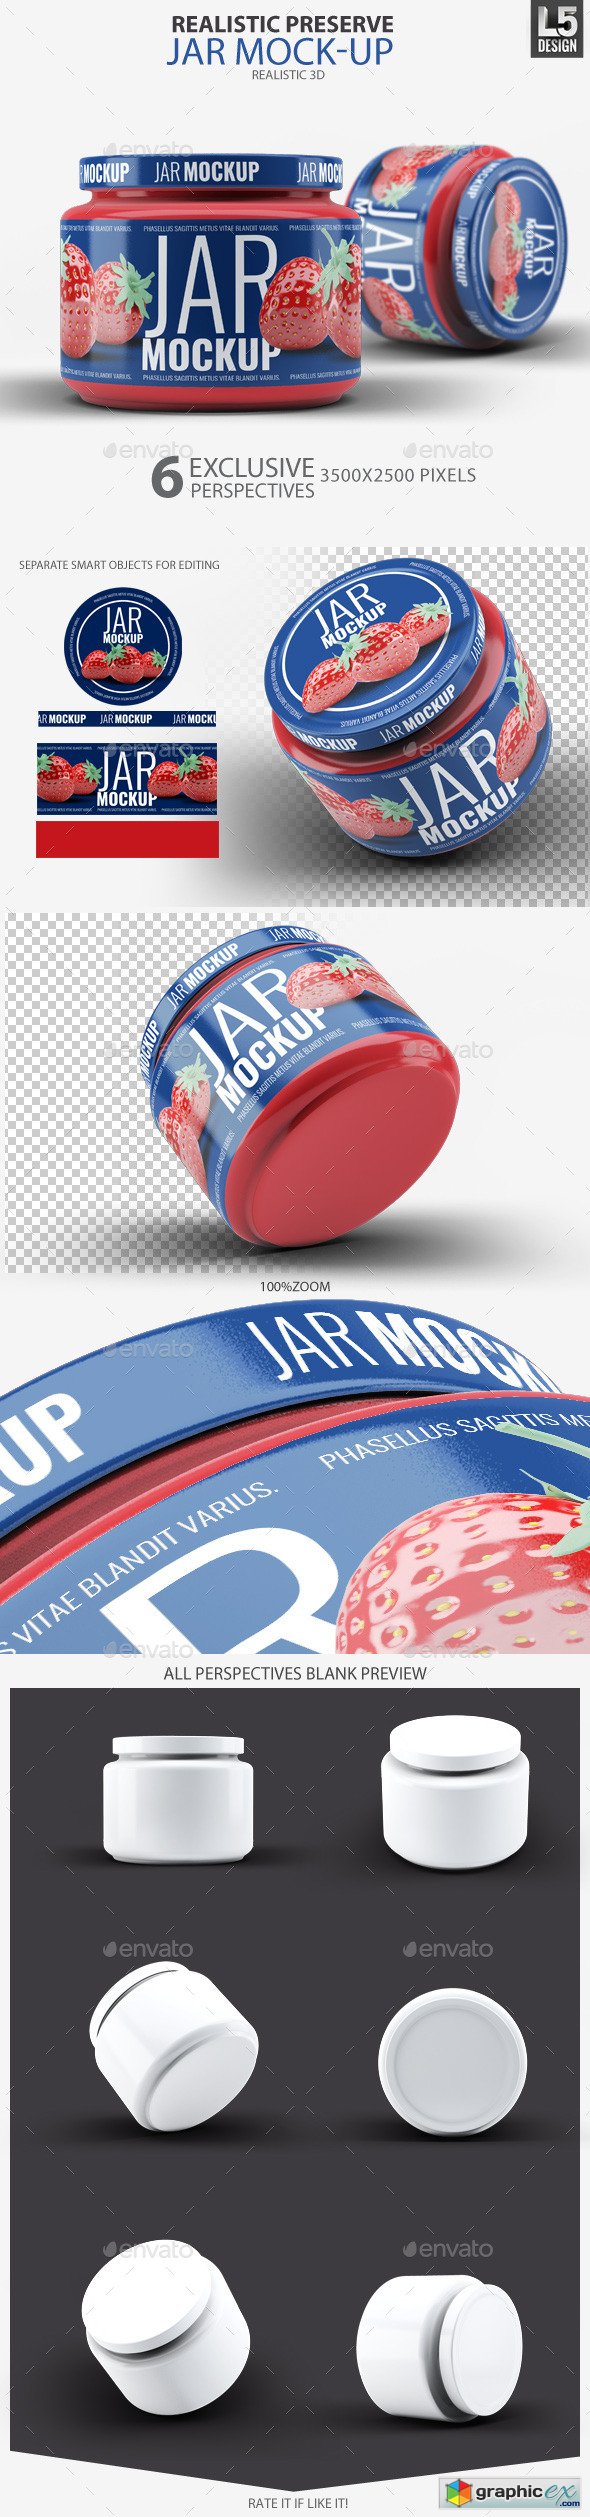 Realistic Preserve Jar Mock-Up